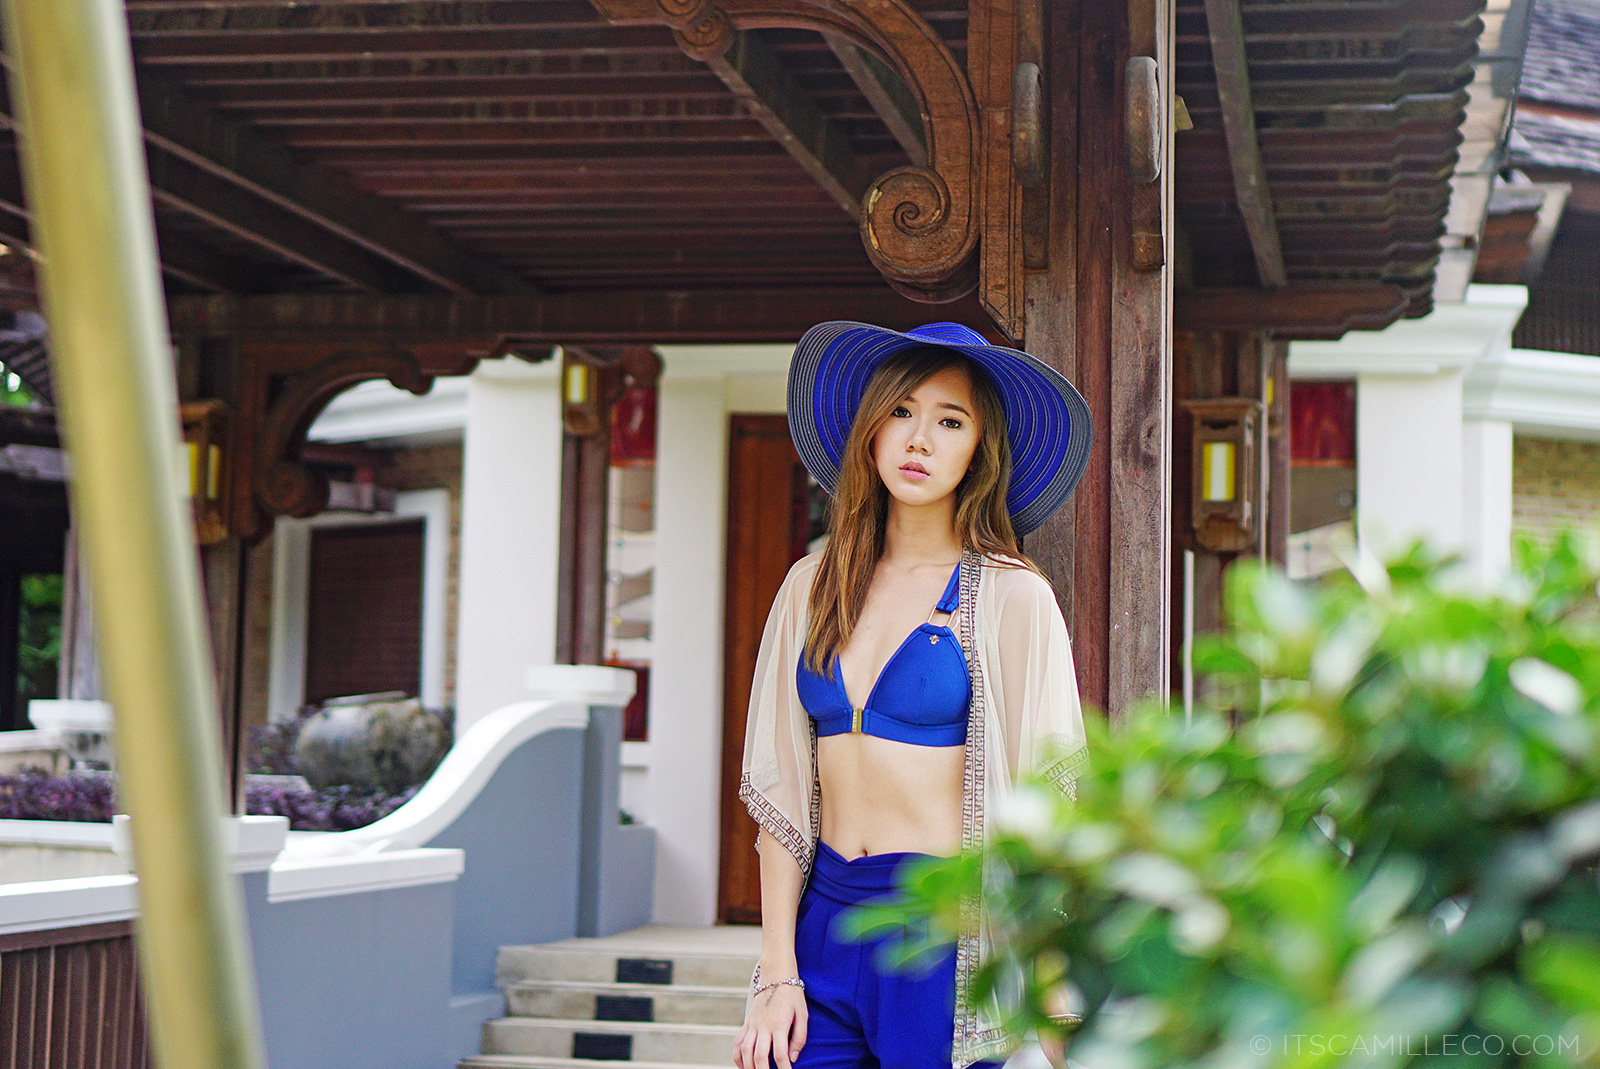 K.Blu Swimwear At Shangri-la Hotel, Chiang Mai | www.itscamilleco.com